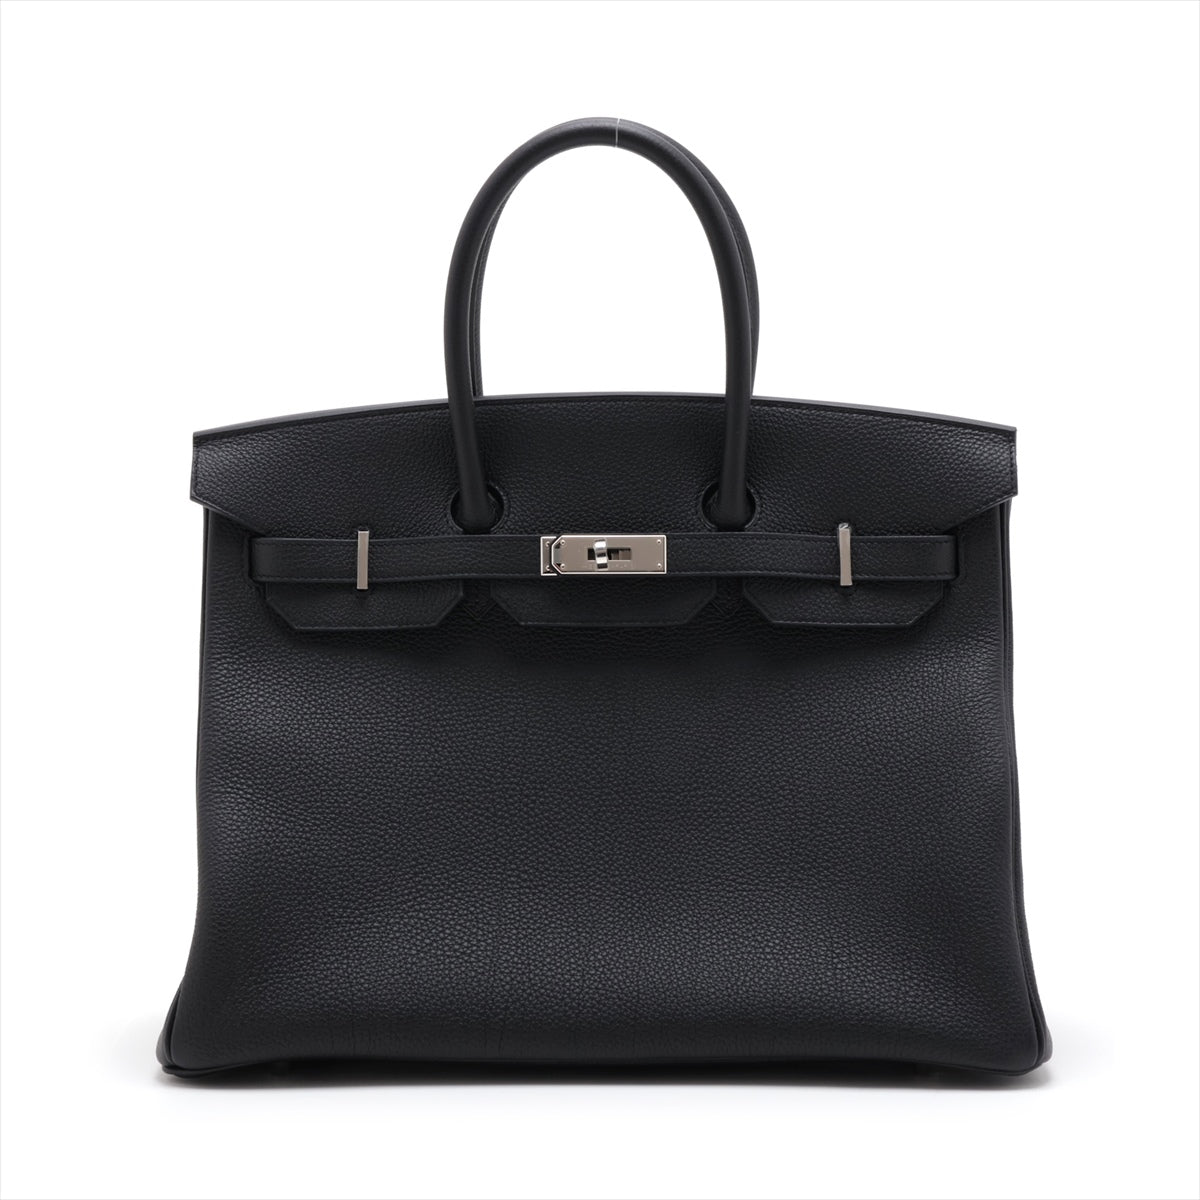 Hermes Black Togo Birkin 35 Handbag